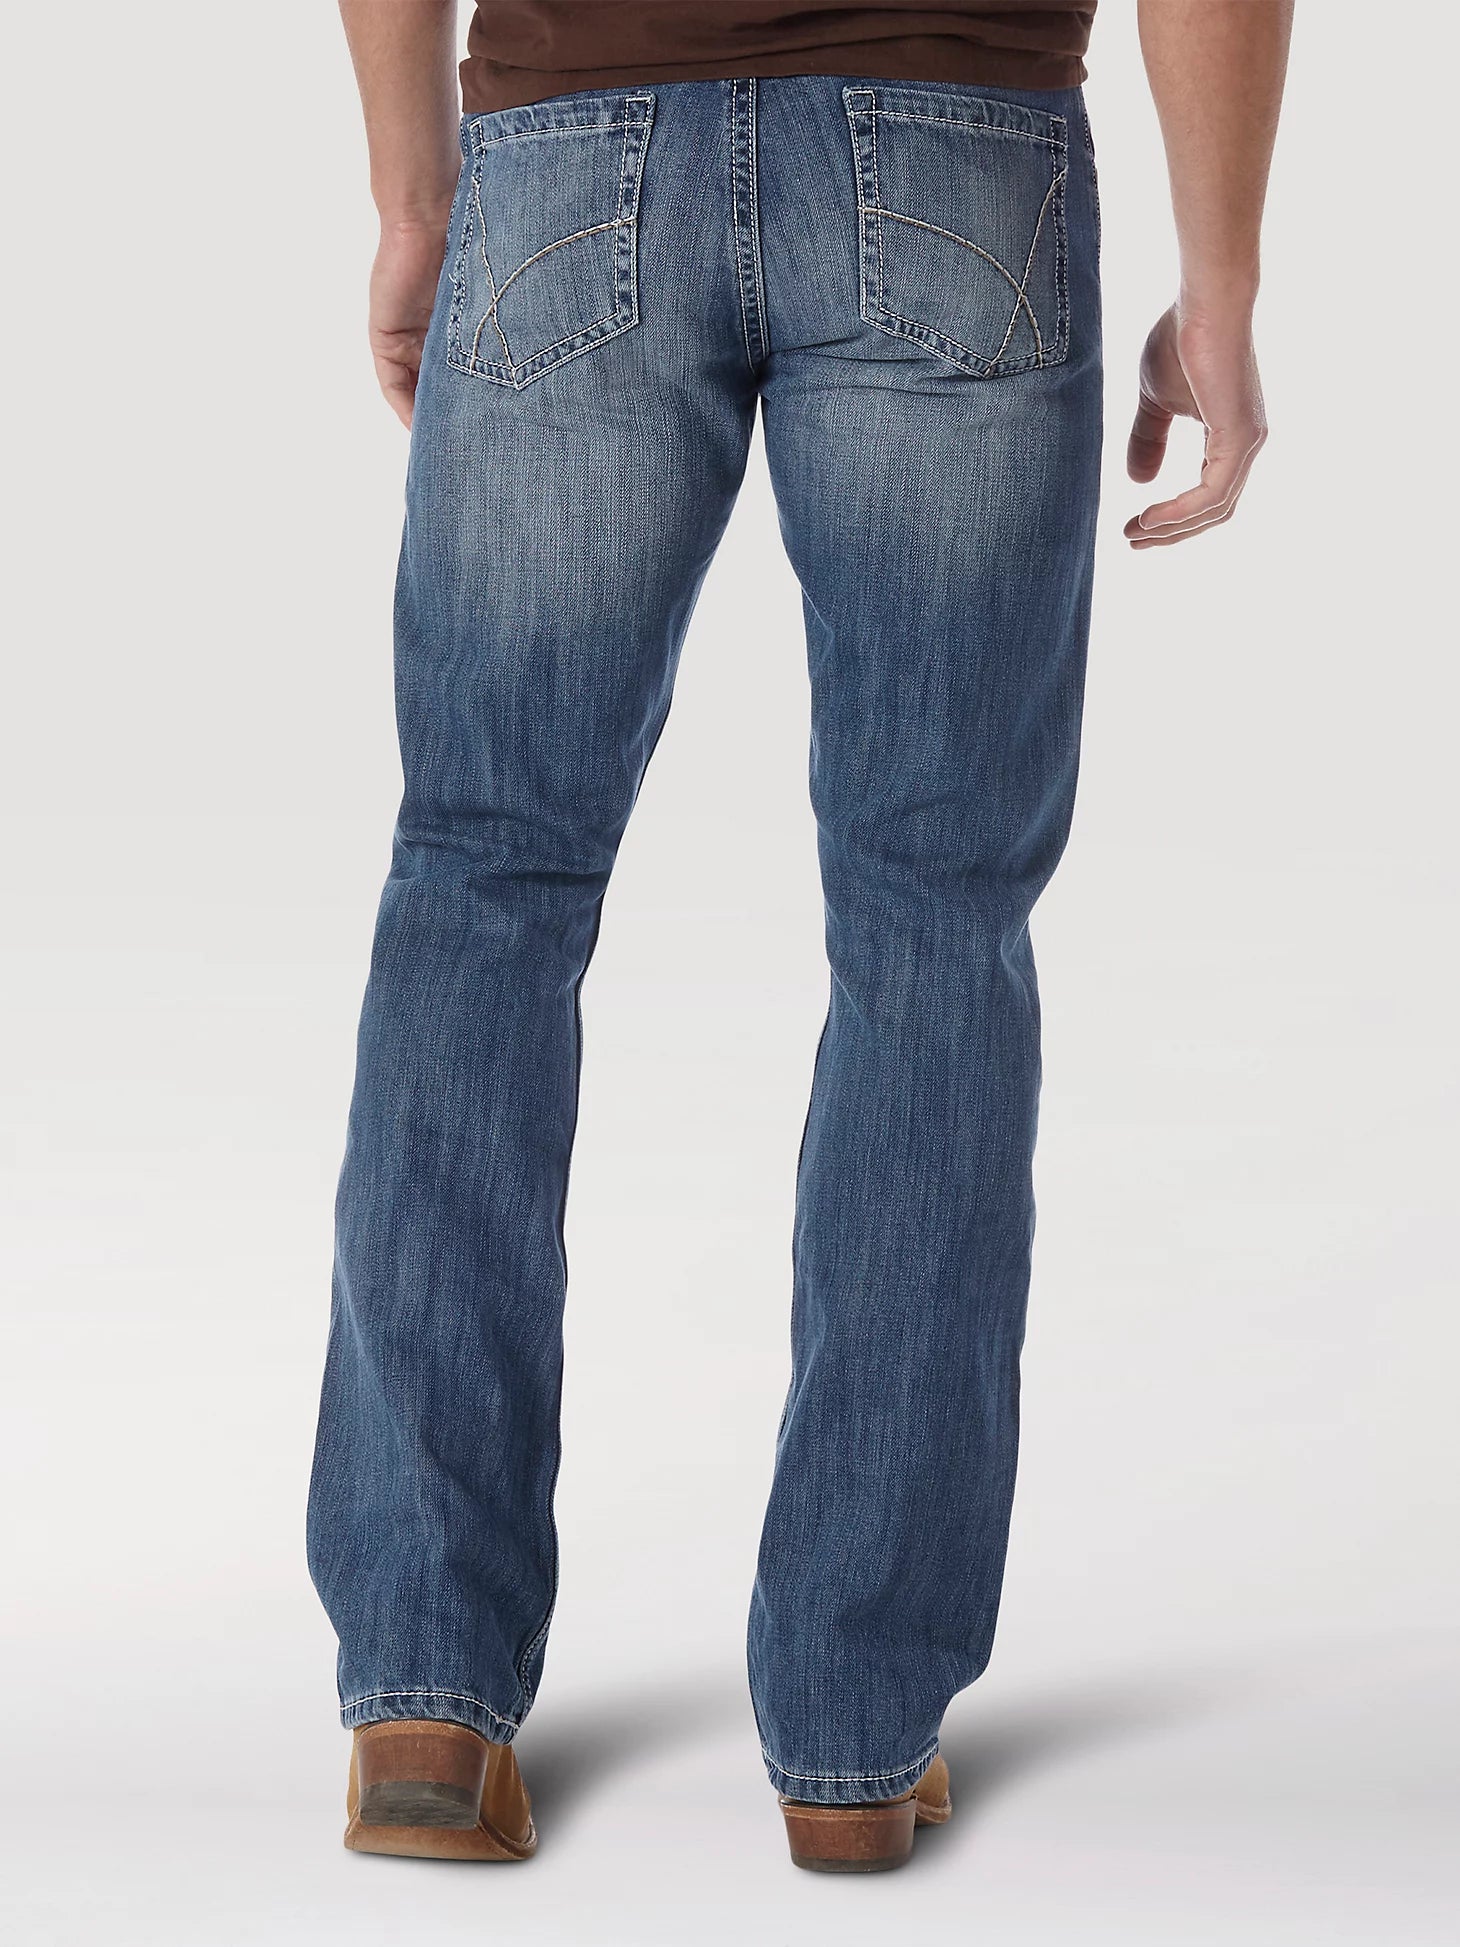 Wrangler Men's No. 42 Vintage Bootcut Jeans